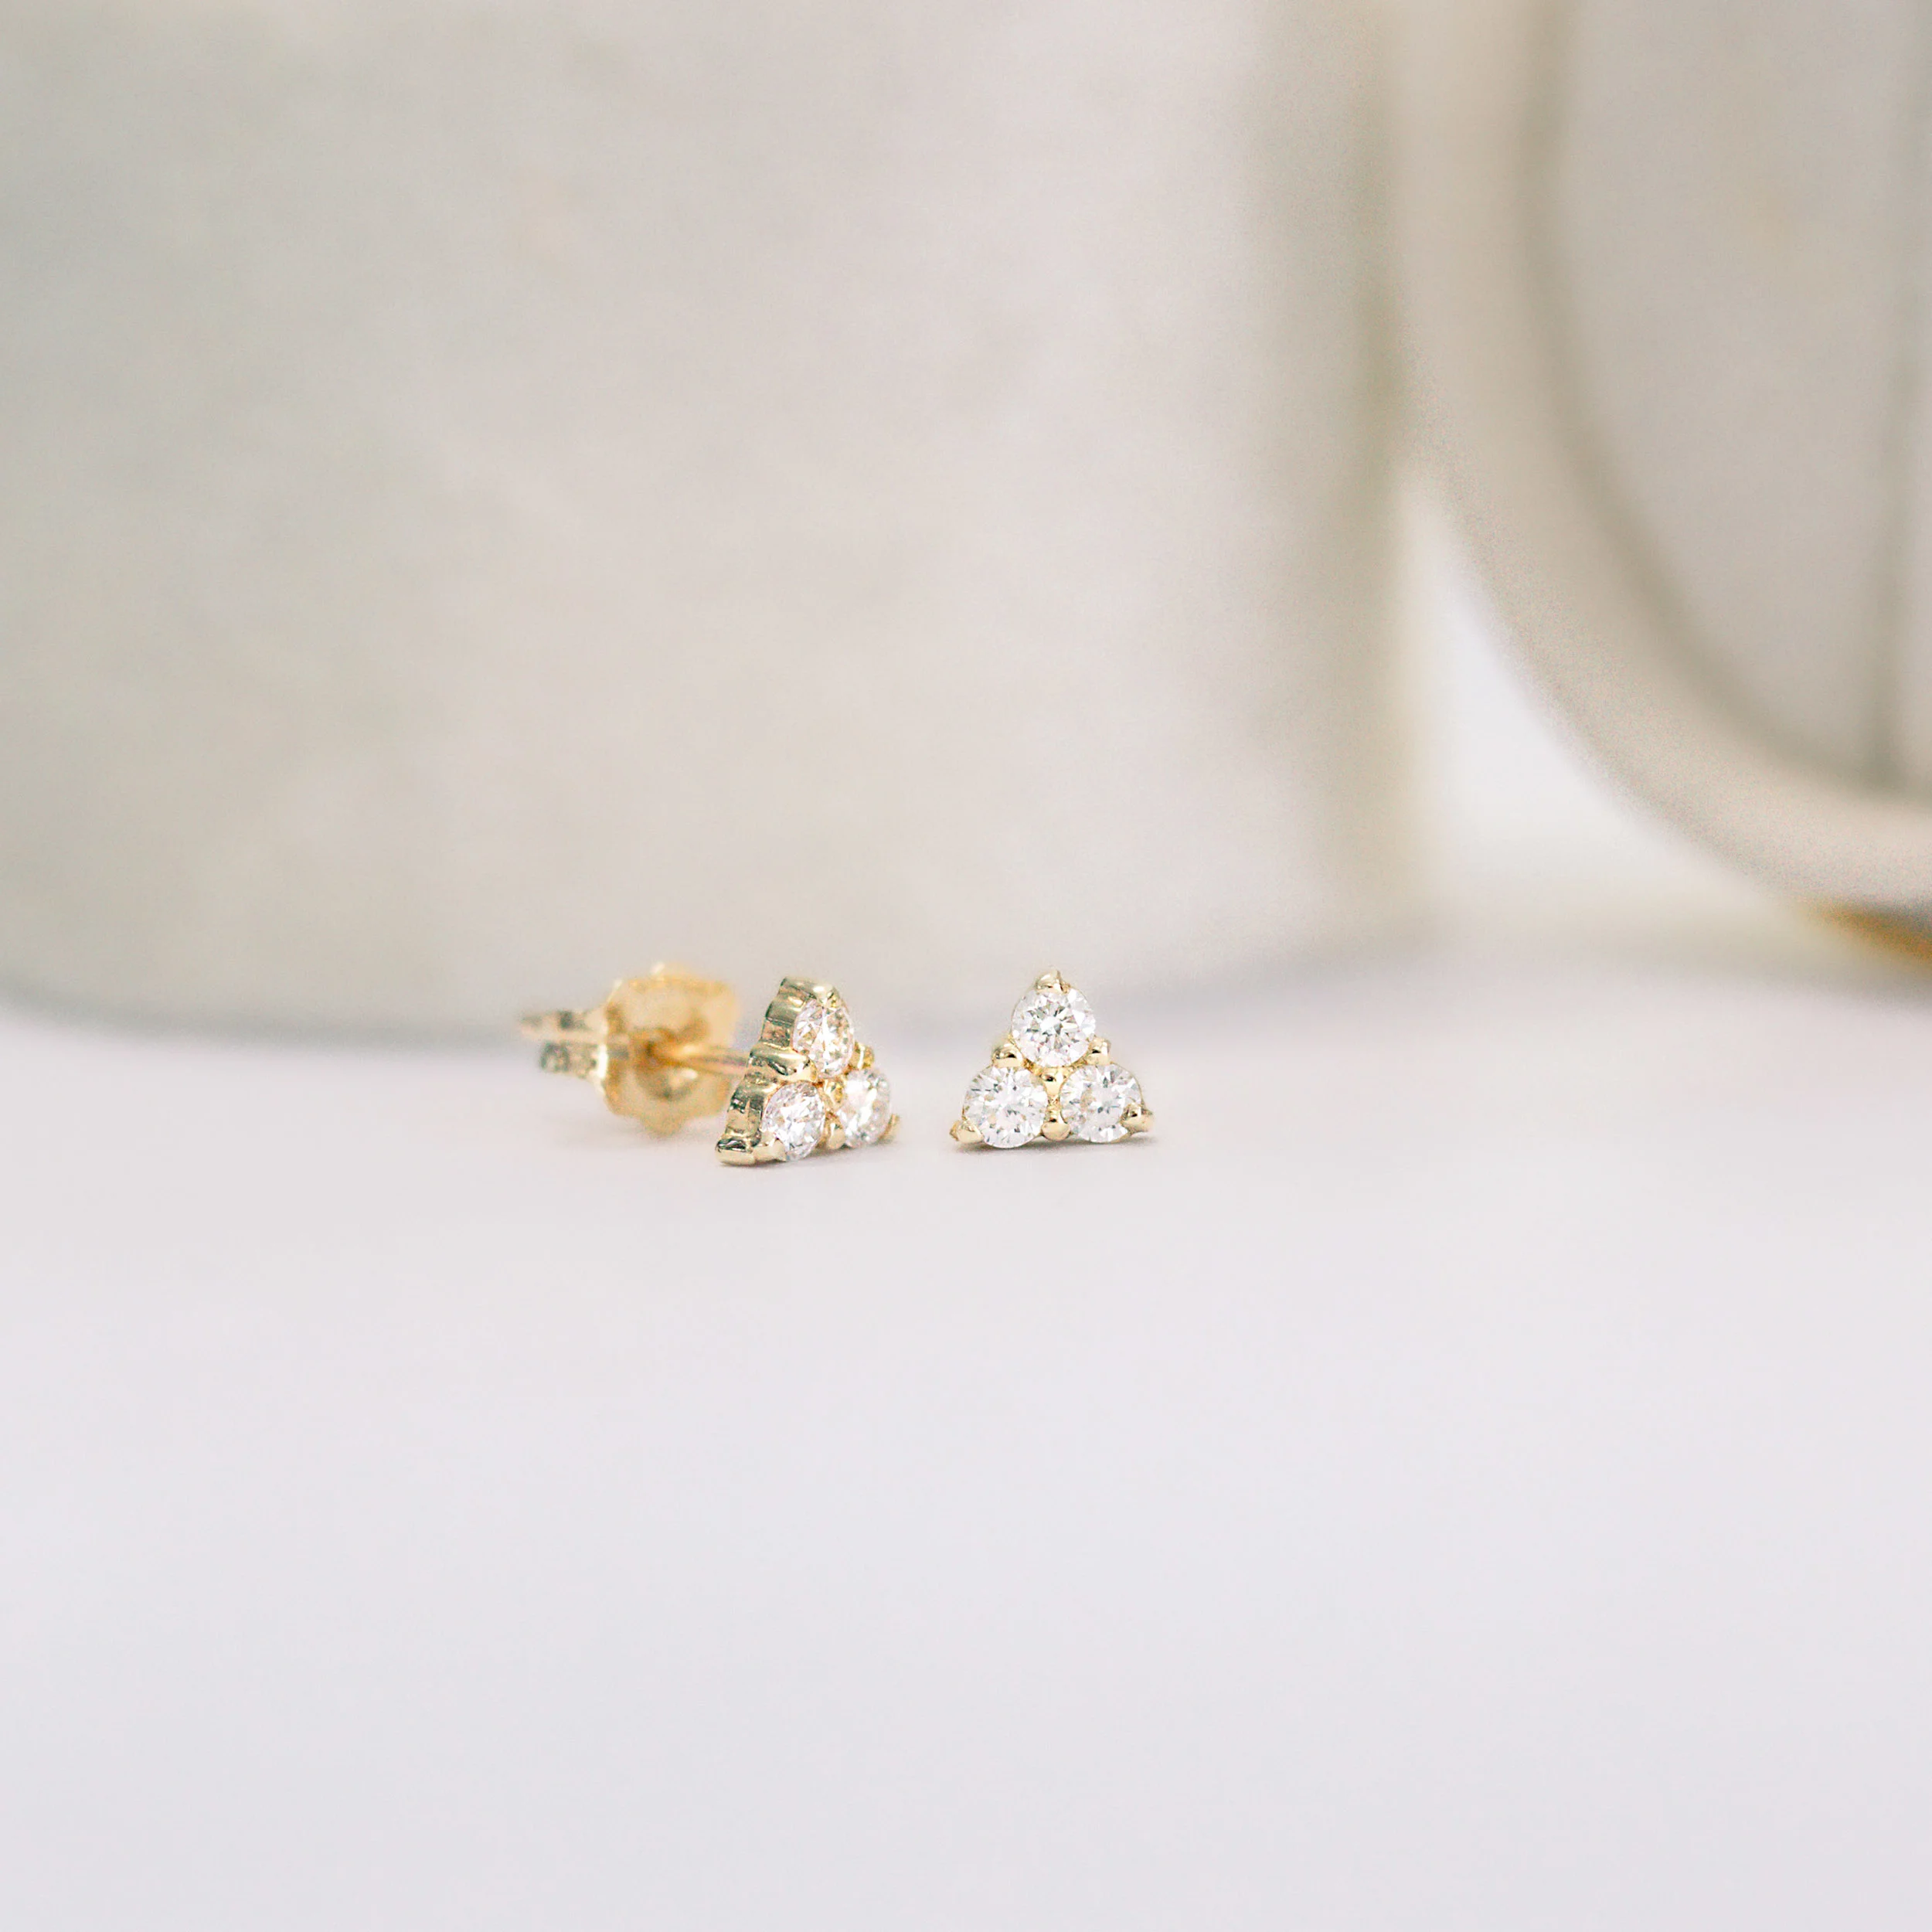 14k Yellow Gold 0.18ctw Three Stone Diamond Earrings in 14k Yellow Gold featuring 0.18 ct Round Lab Diamonds (Main View)